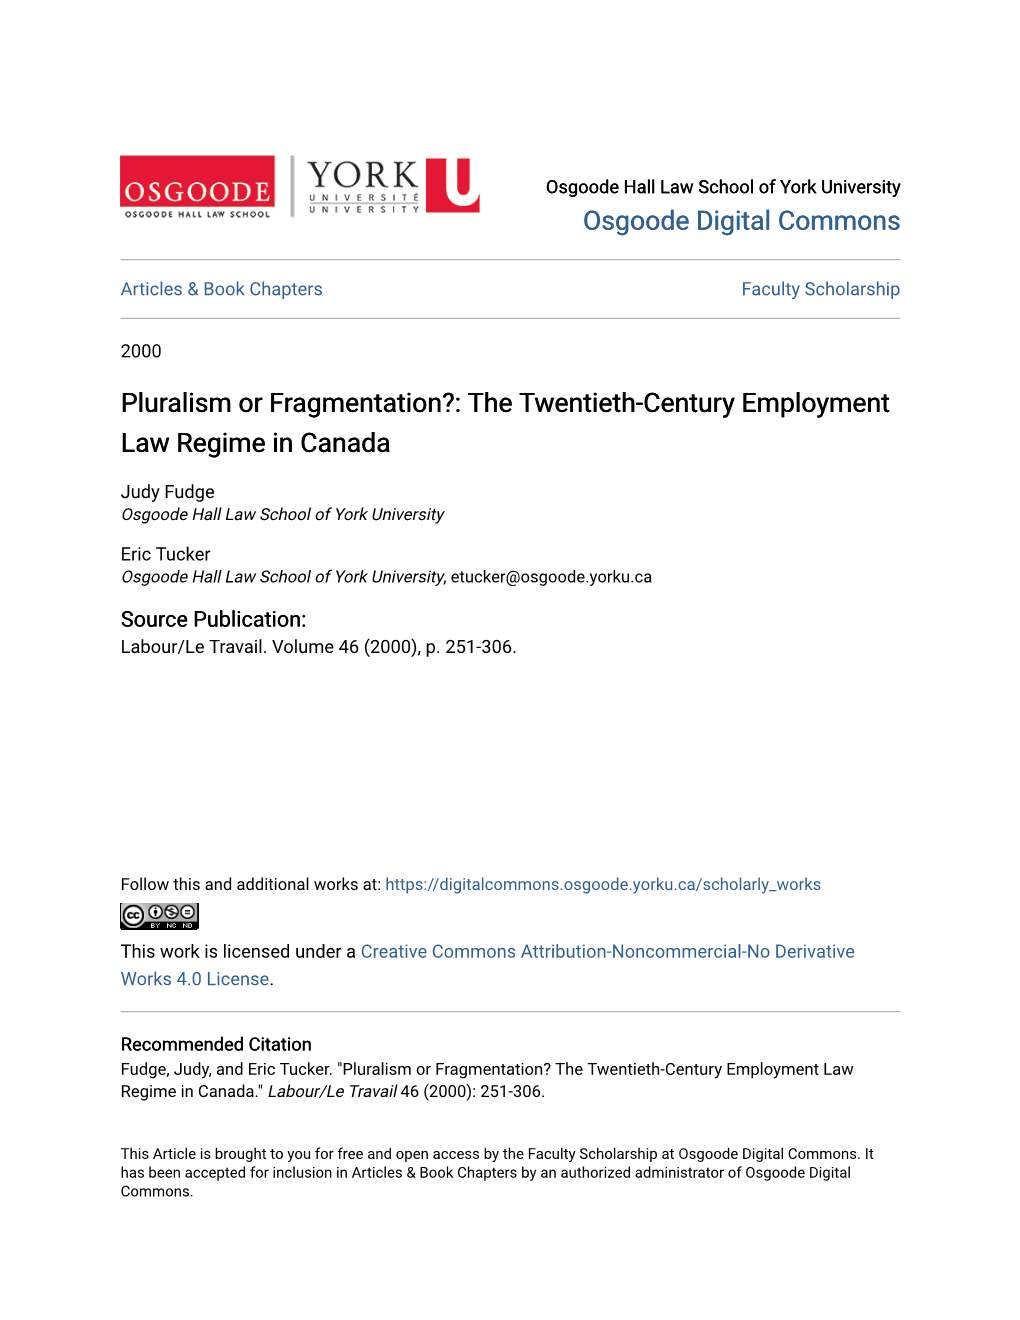 The Twentieth-Century Employment Law Regime in Canada